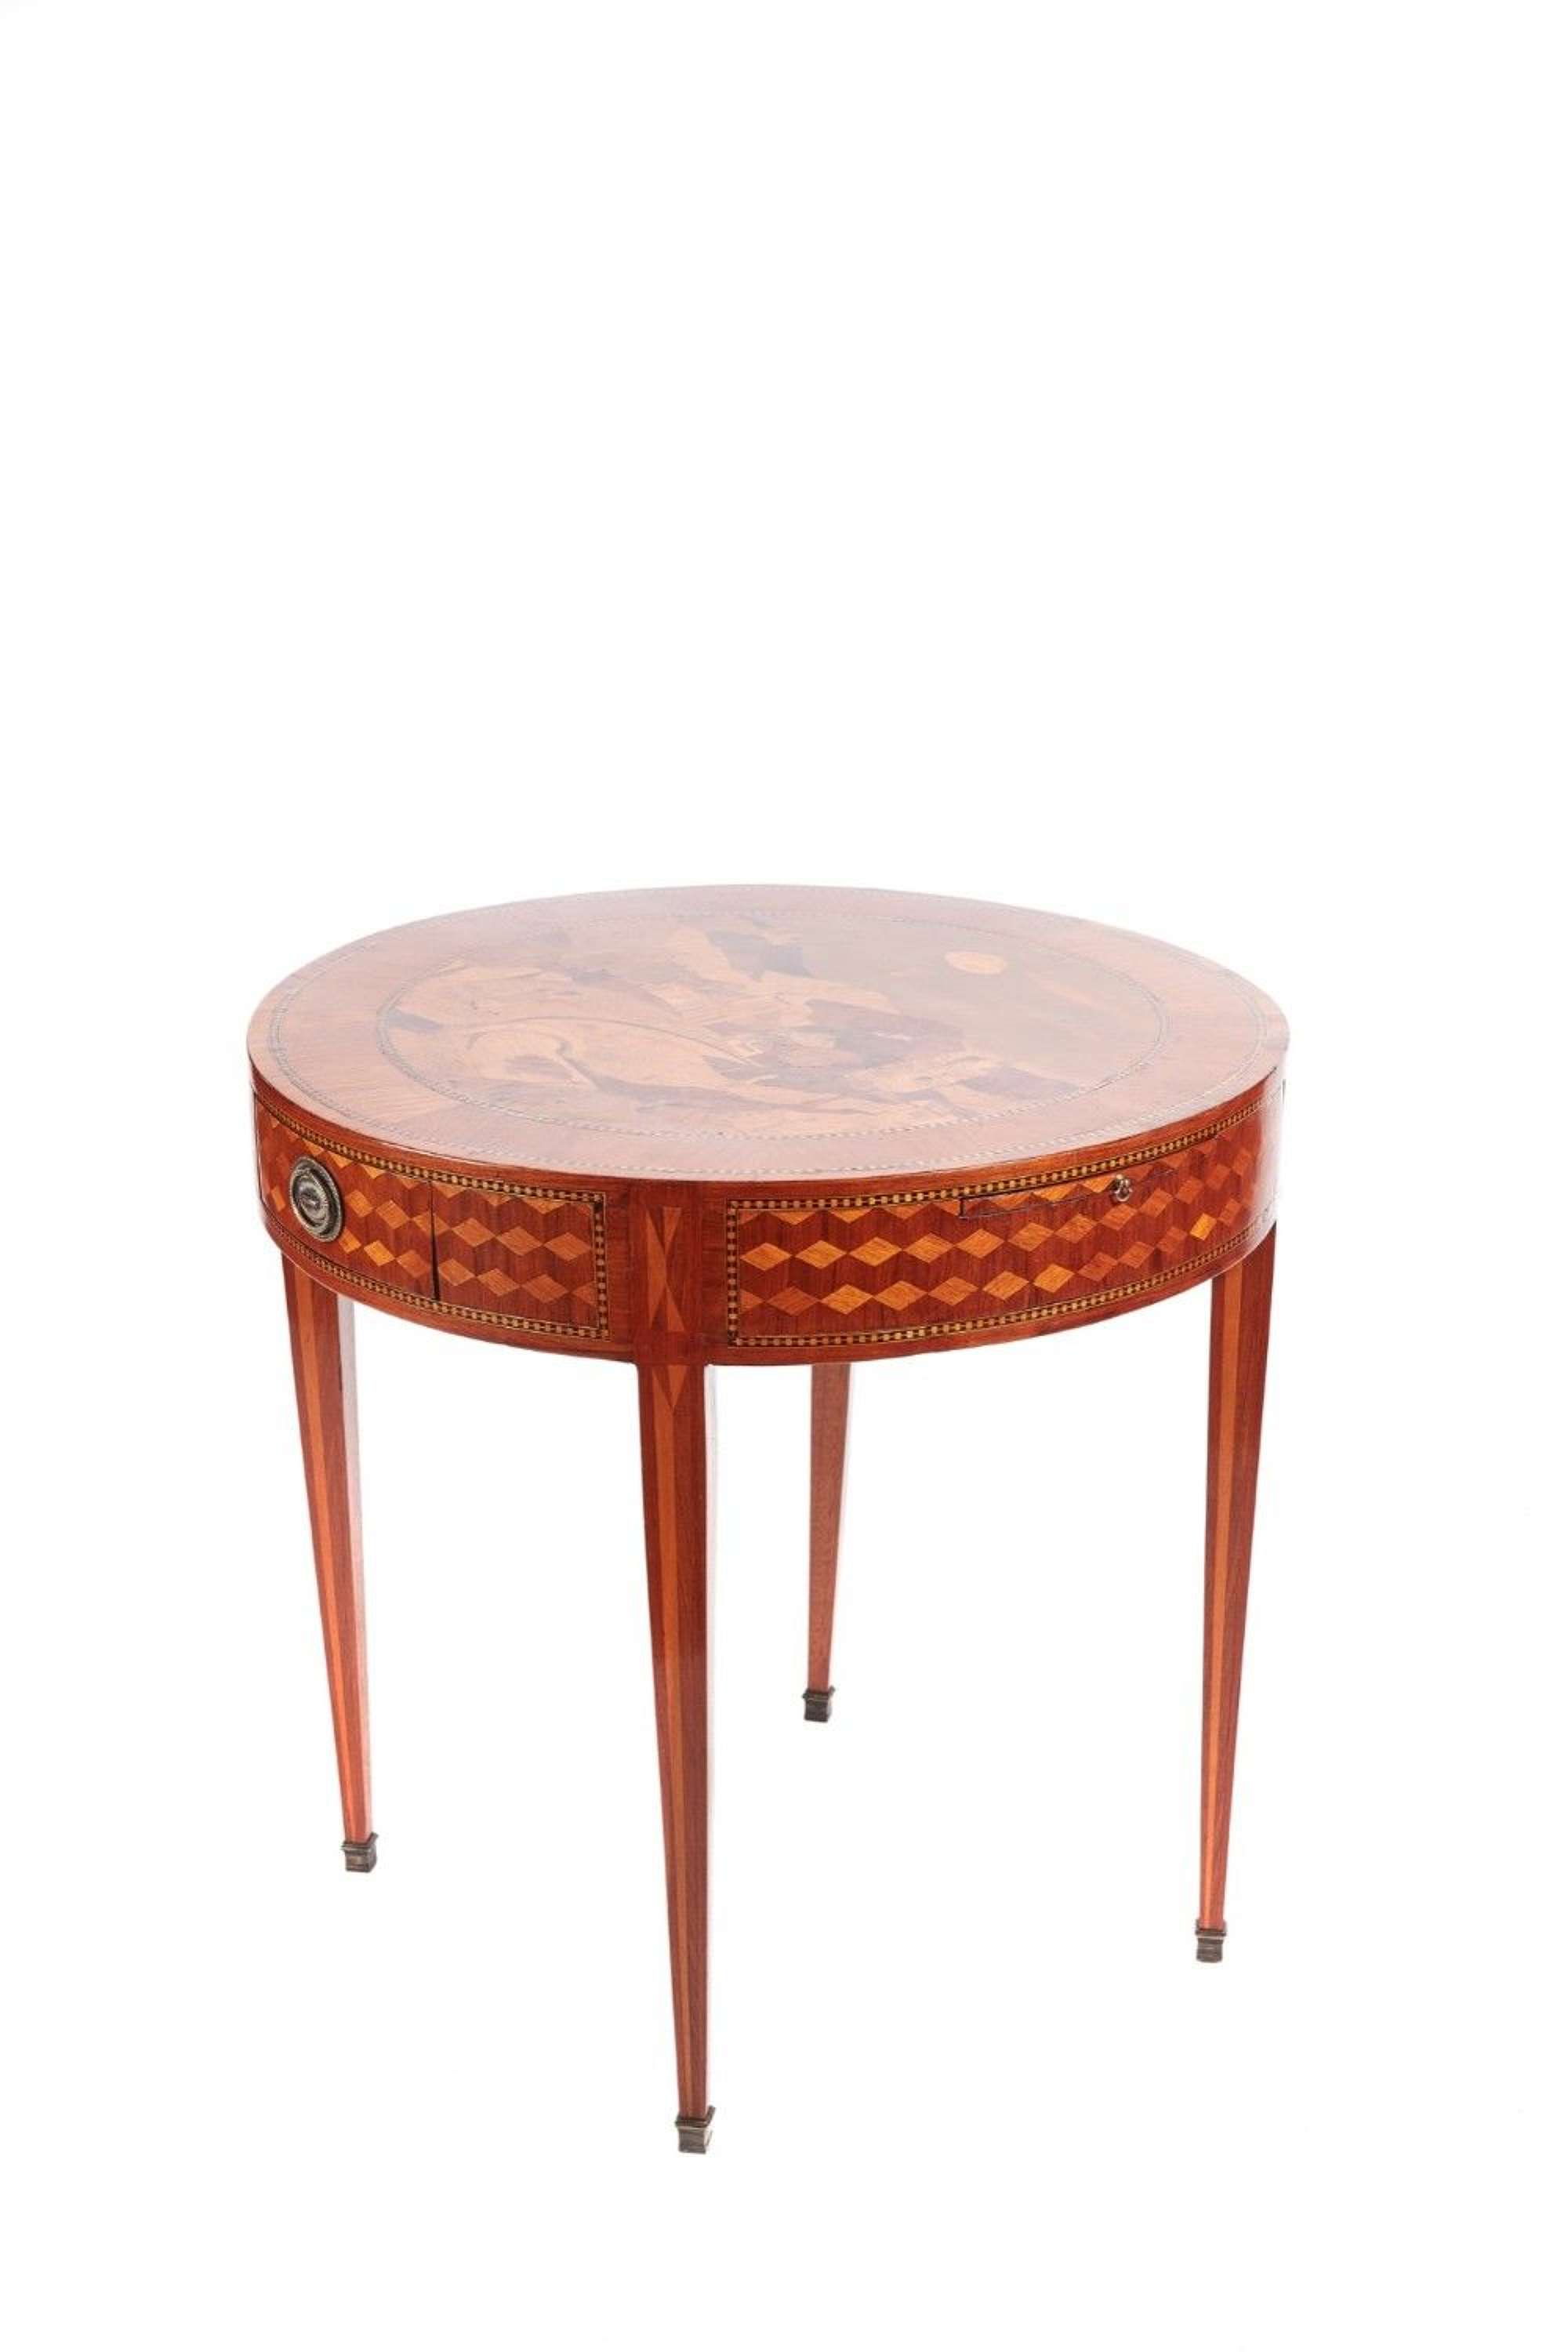 Magnificent  Antique Inlaid Satinwood Centre Table